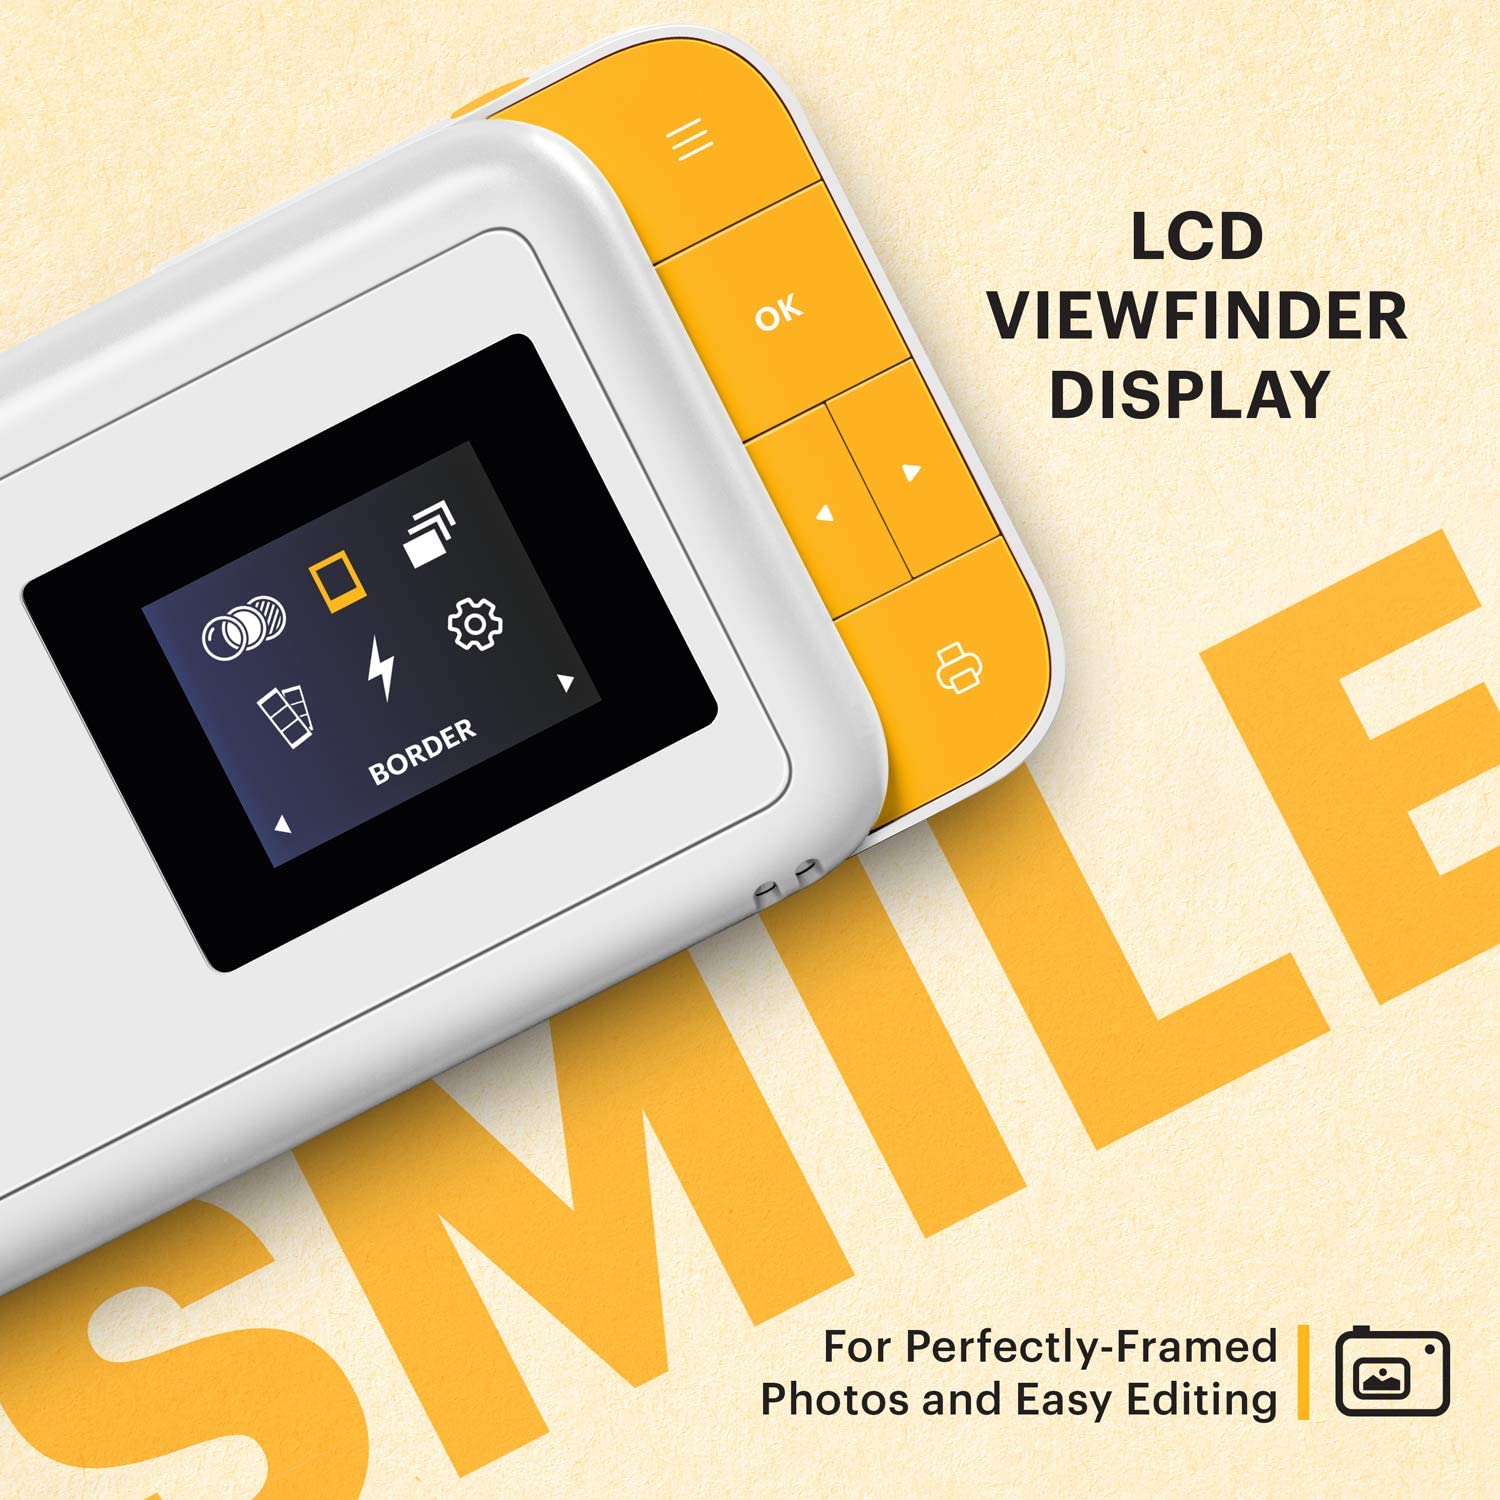 Kodak Smile Instant Print Digital Camera – Slide-Open 10MP Camera w/2x3 ZINK Printer, Screen, Fixed Focus, Auto Flash and Photo Editing – White/Yellow